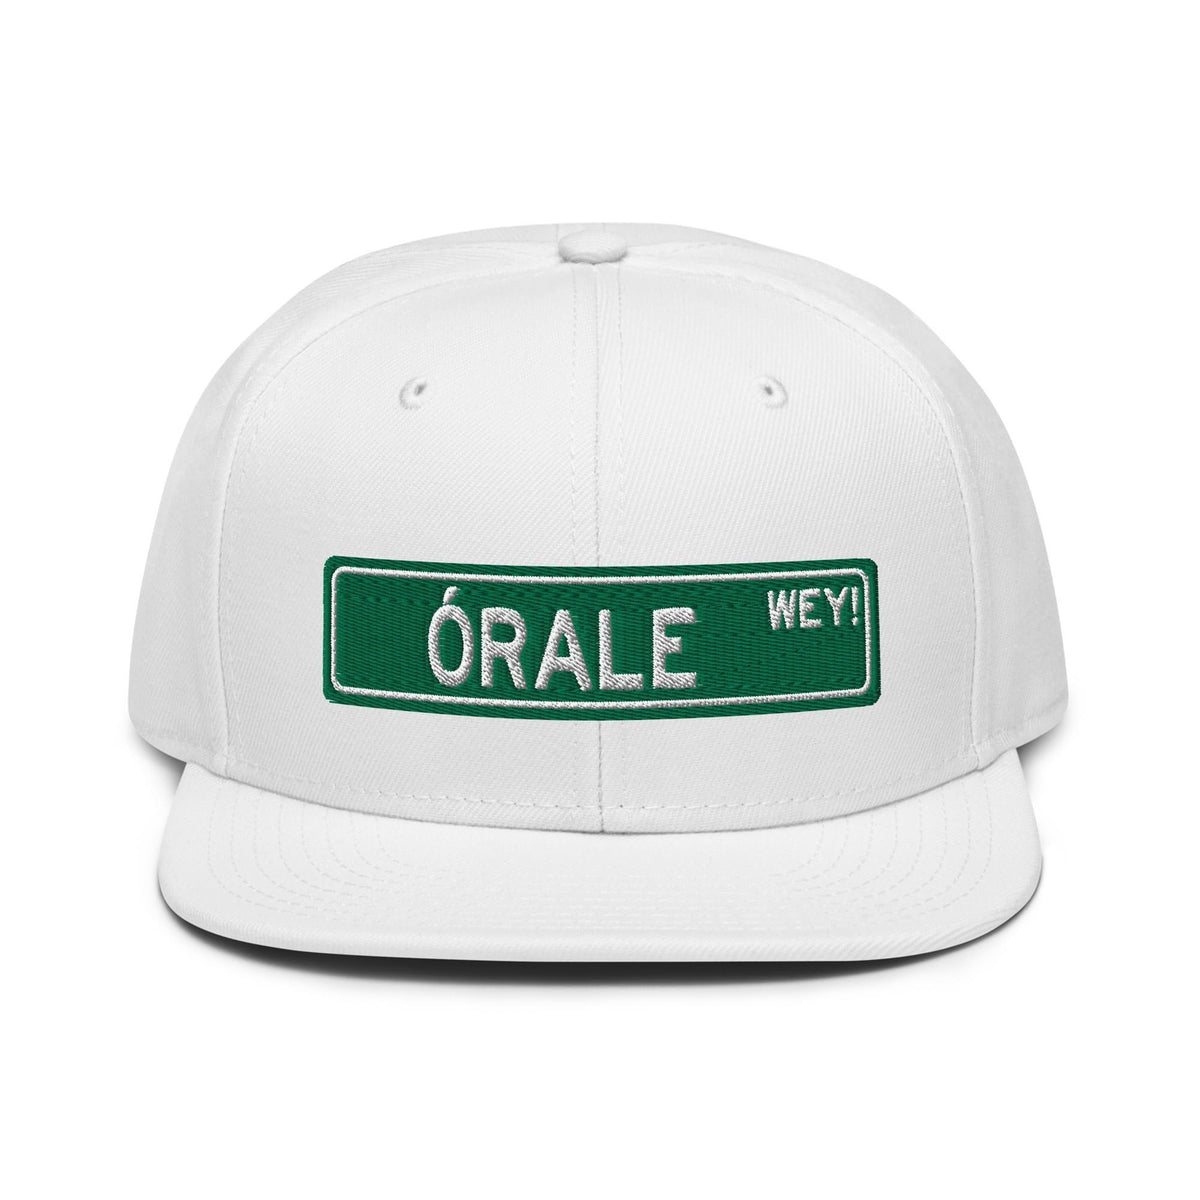 Órale Wey Snapback Hat